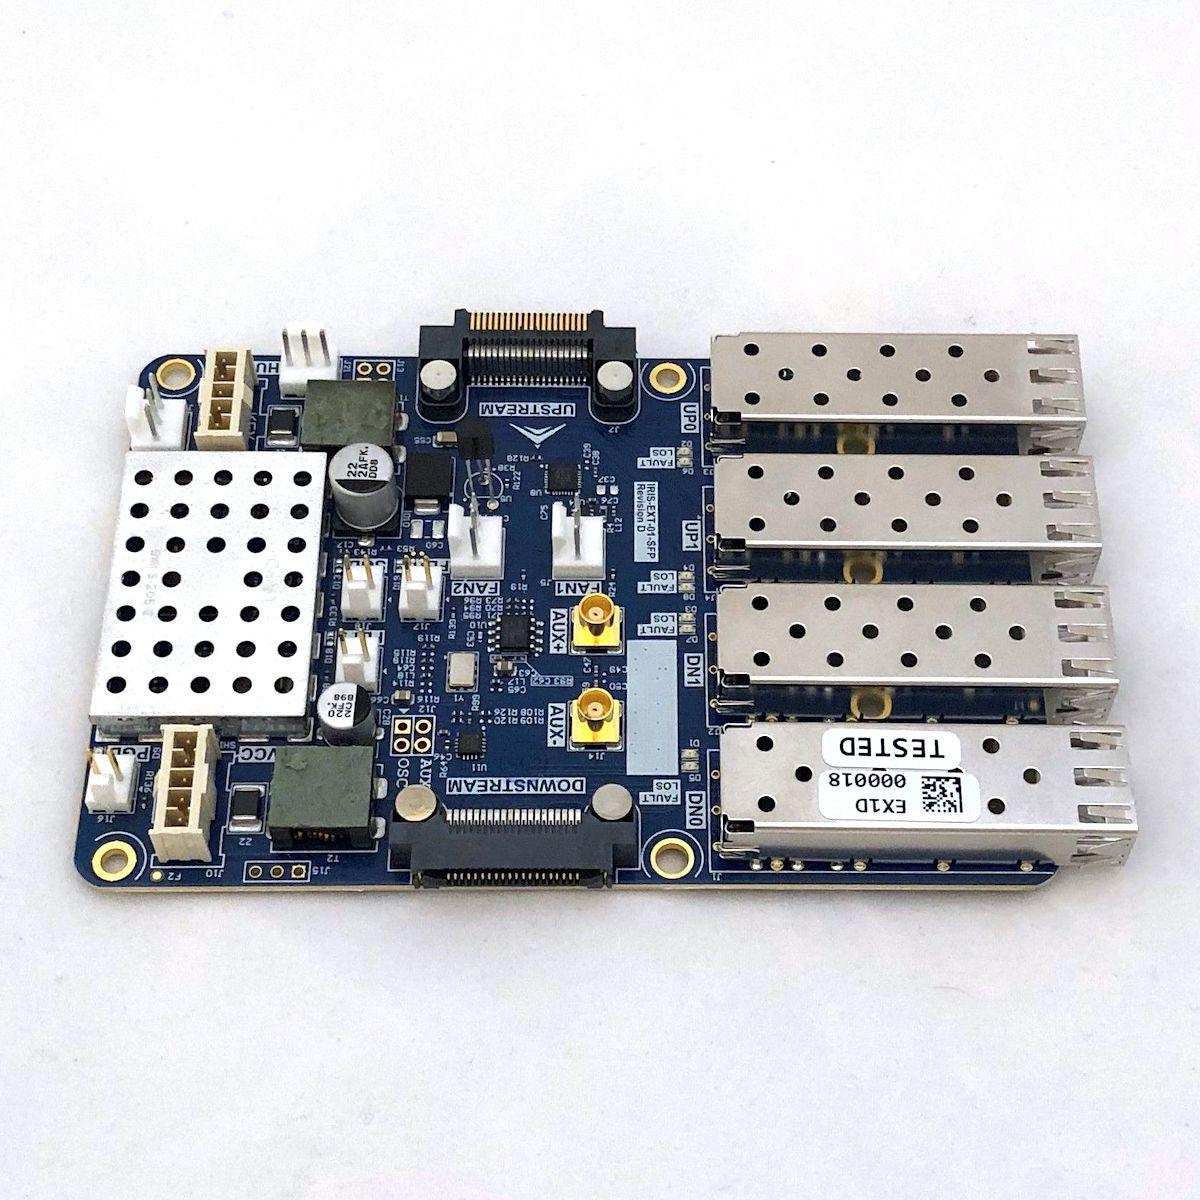 Product SFP+ 13.2 Gbps Adapter - Skylark Wireless image